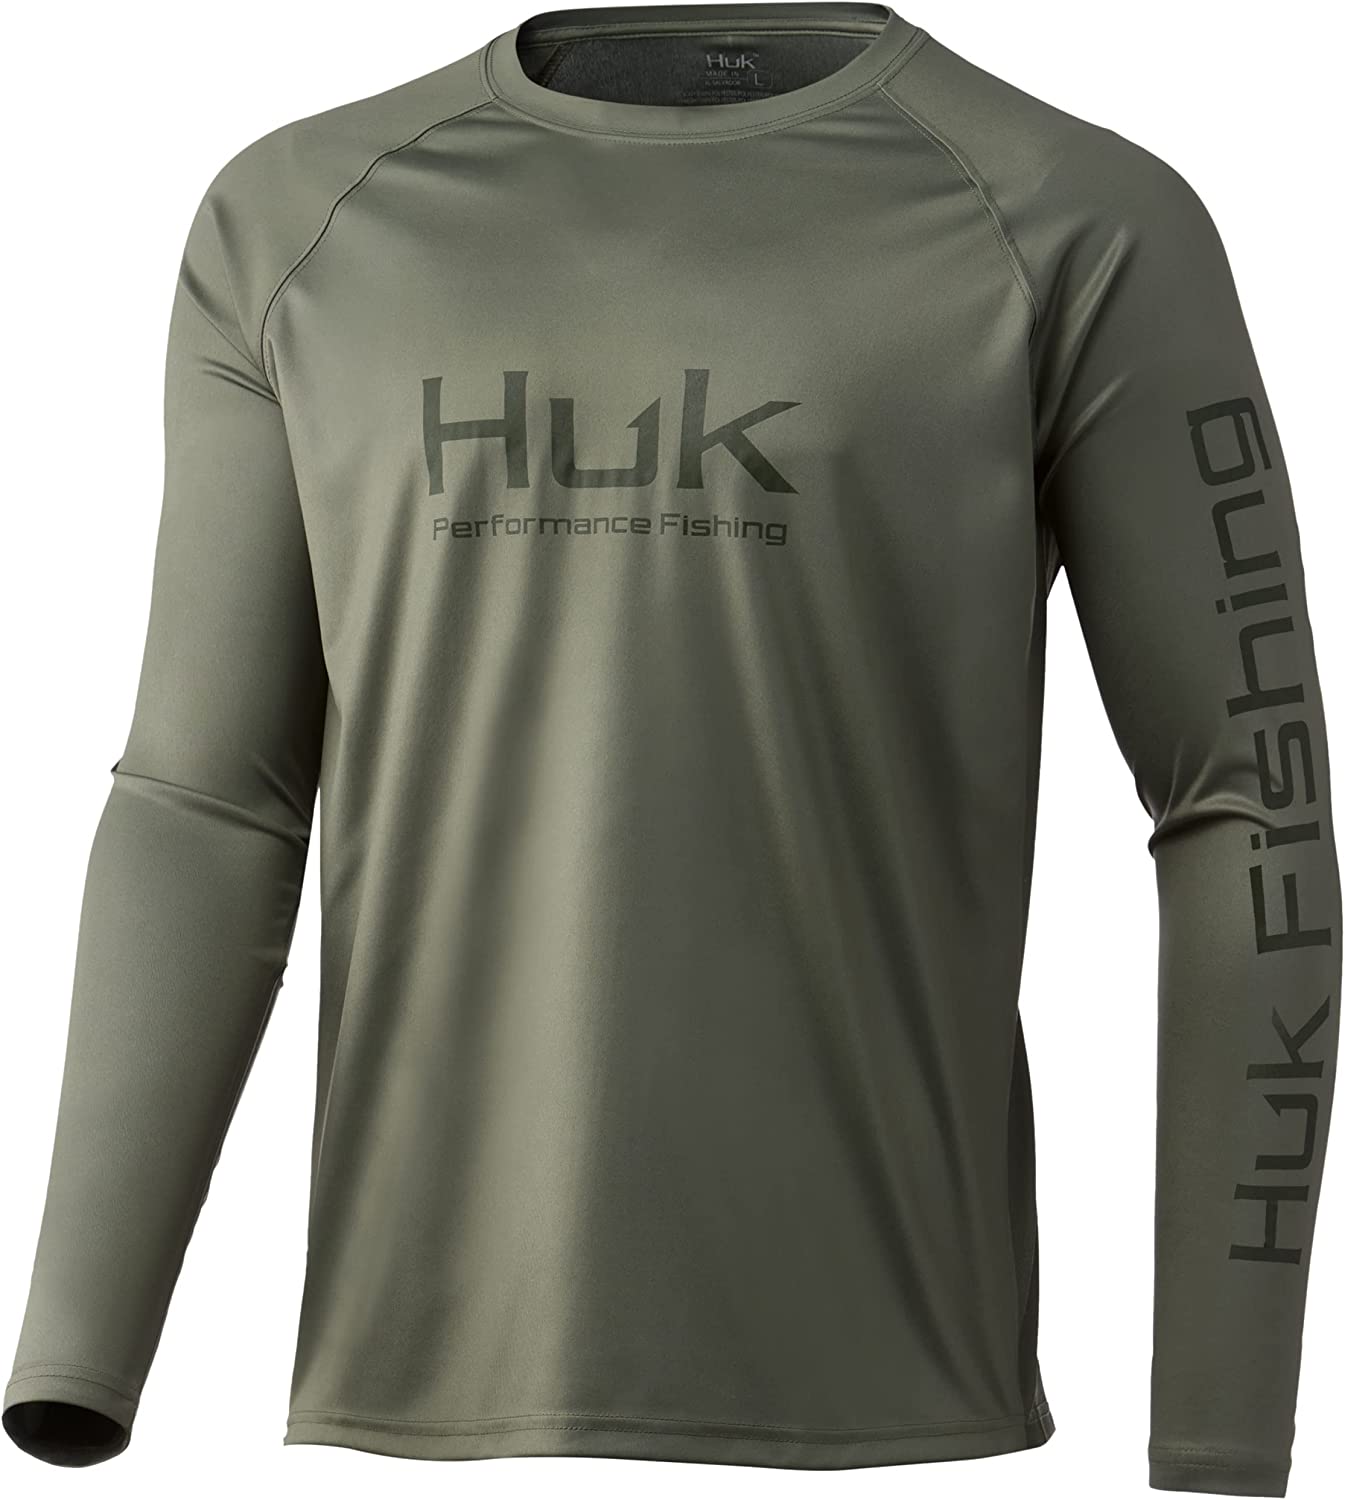 Huk Vented Pursuit Long Sleeve Shirt